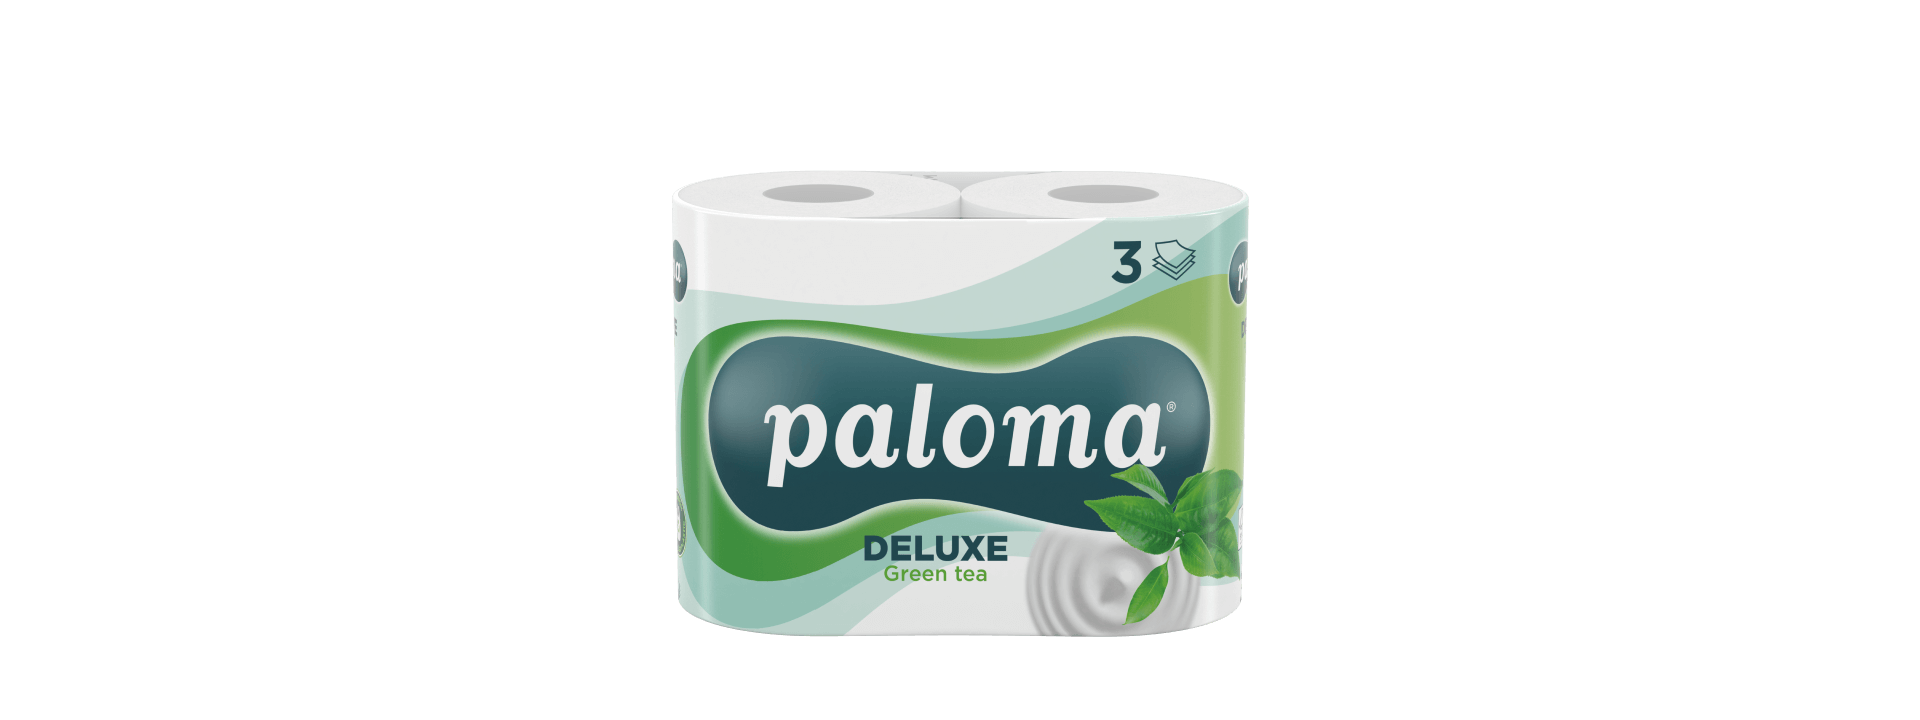 Paloma Deluxe Green Tea 4